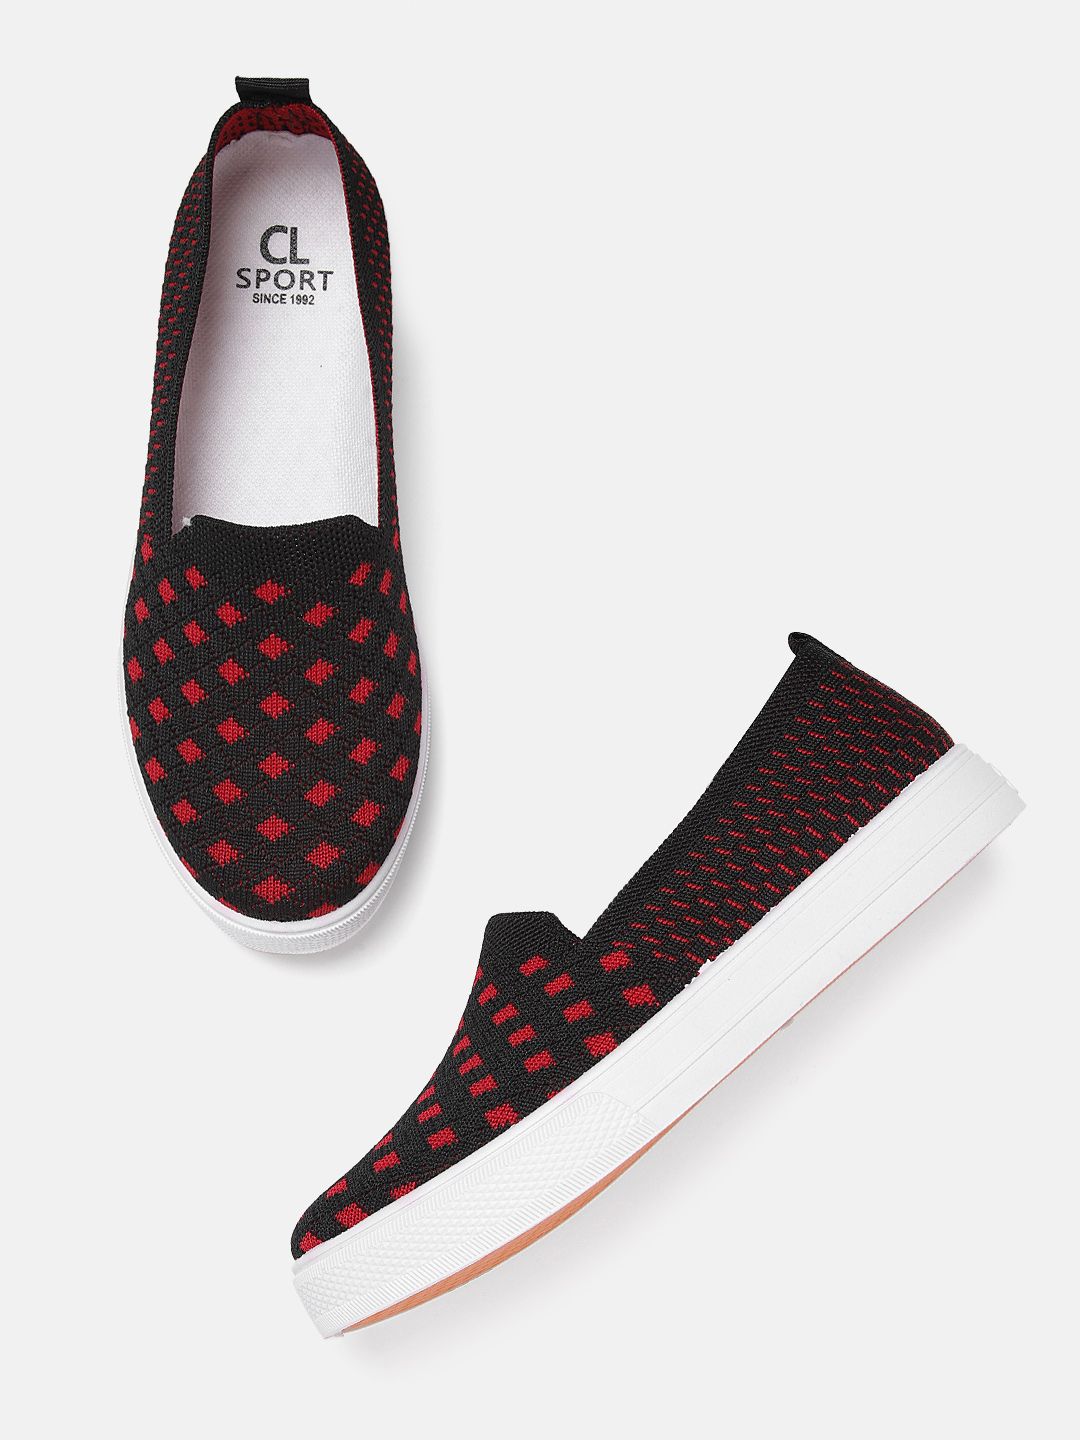 Carlton London sports Women Black & Red Geometric Woven Design Slip-On Sneakers Price in India